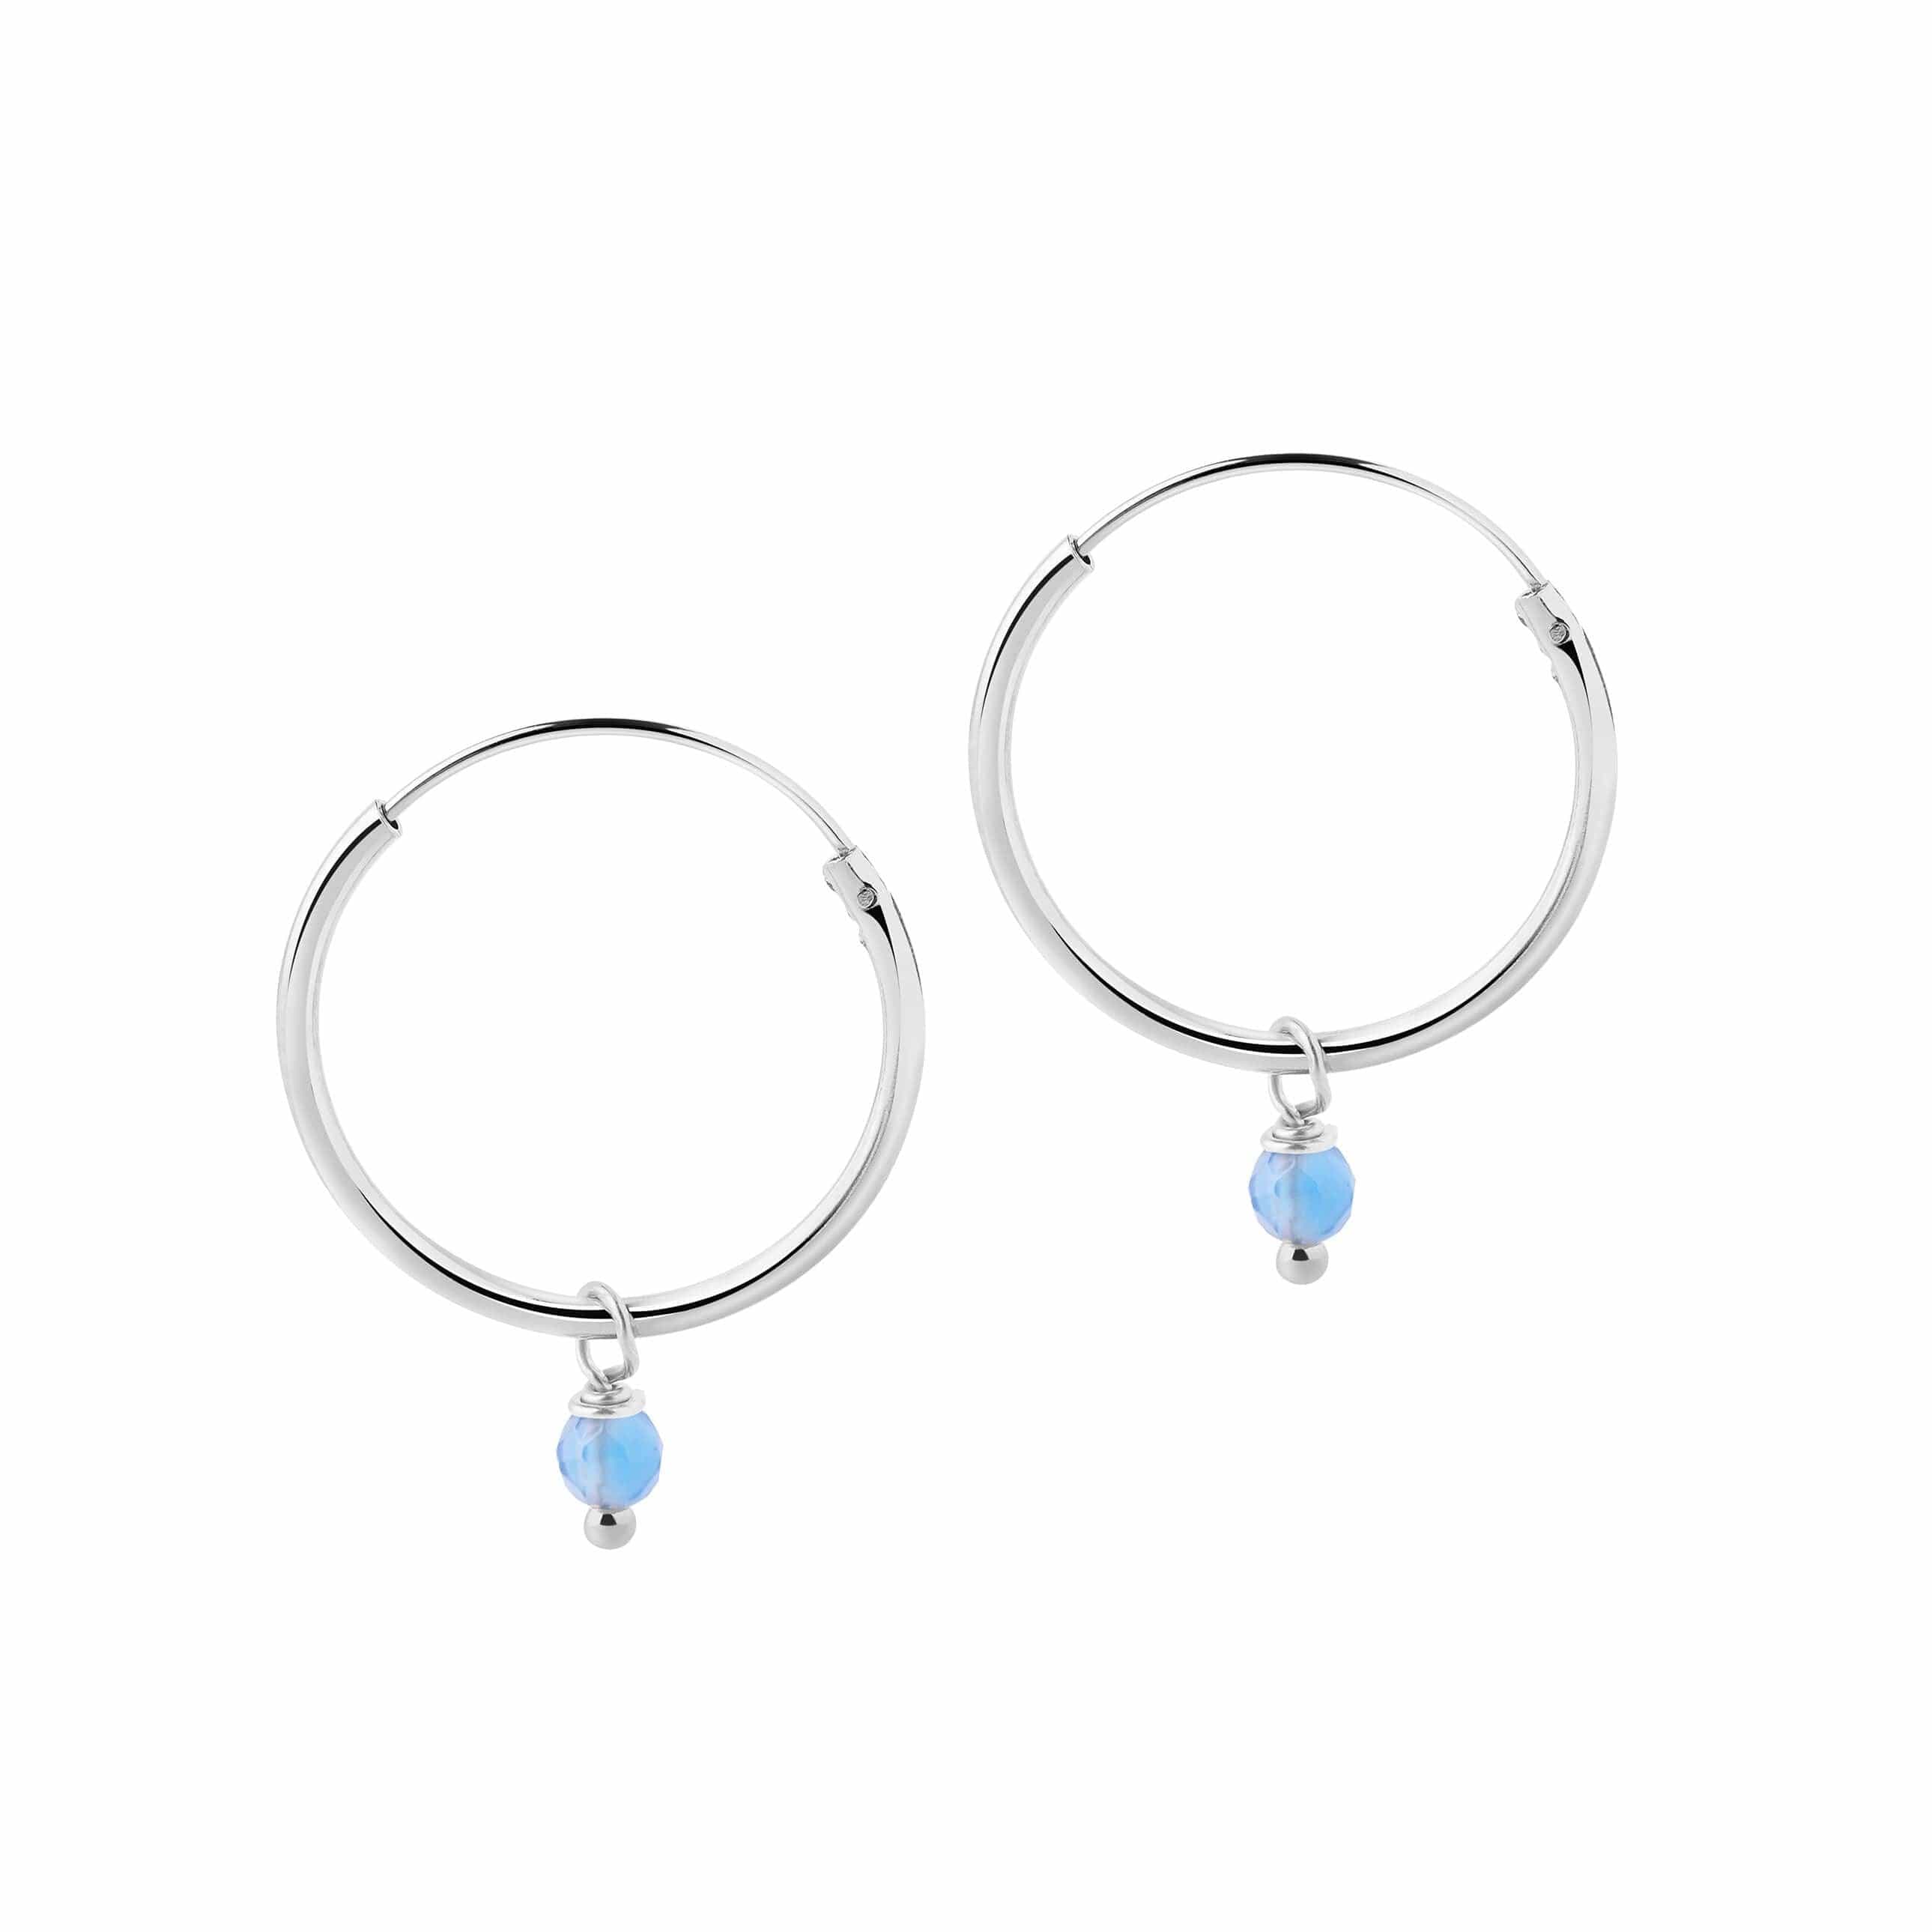 Silver Hoop Earrings with Blue Stone 18mm